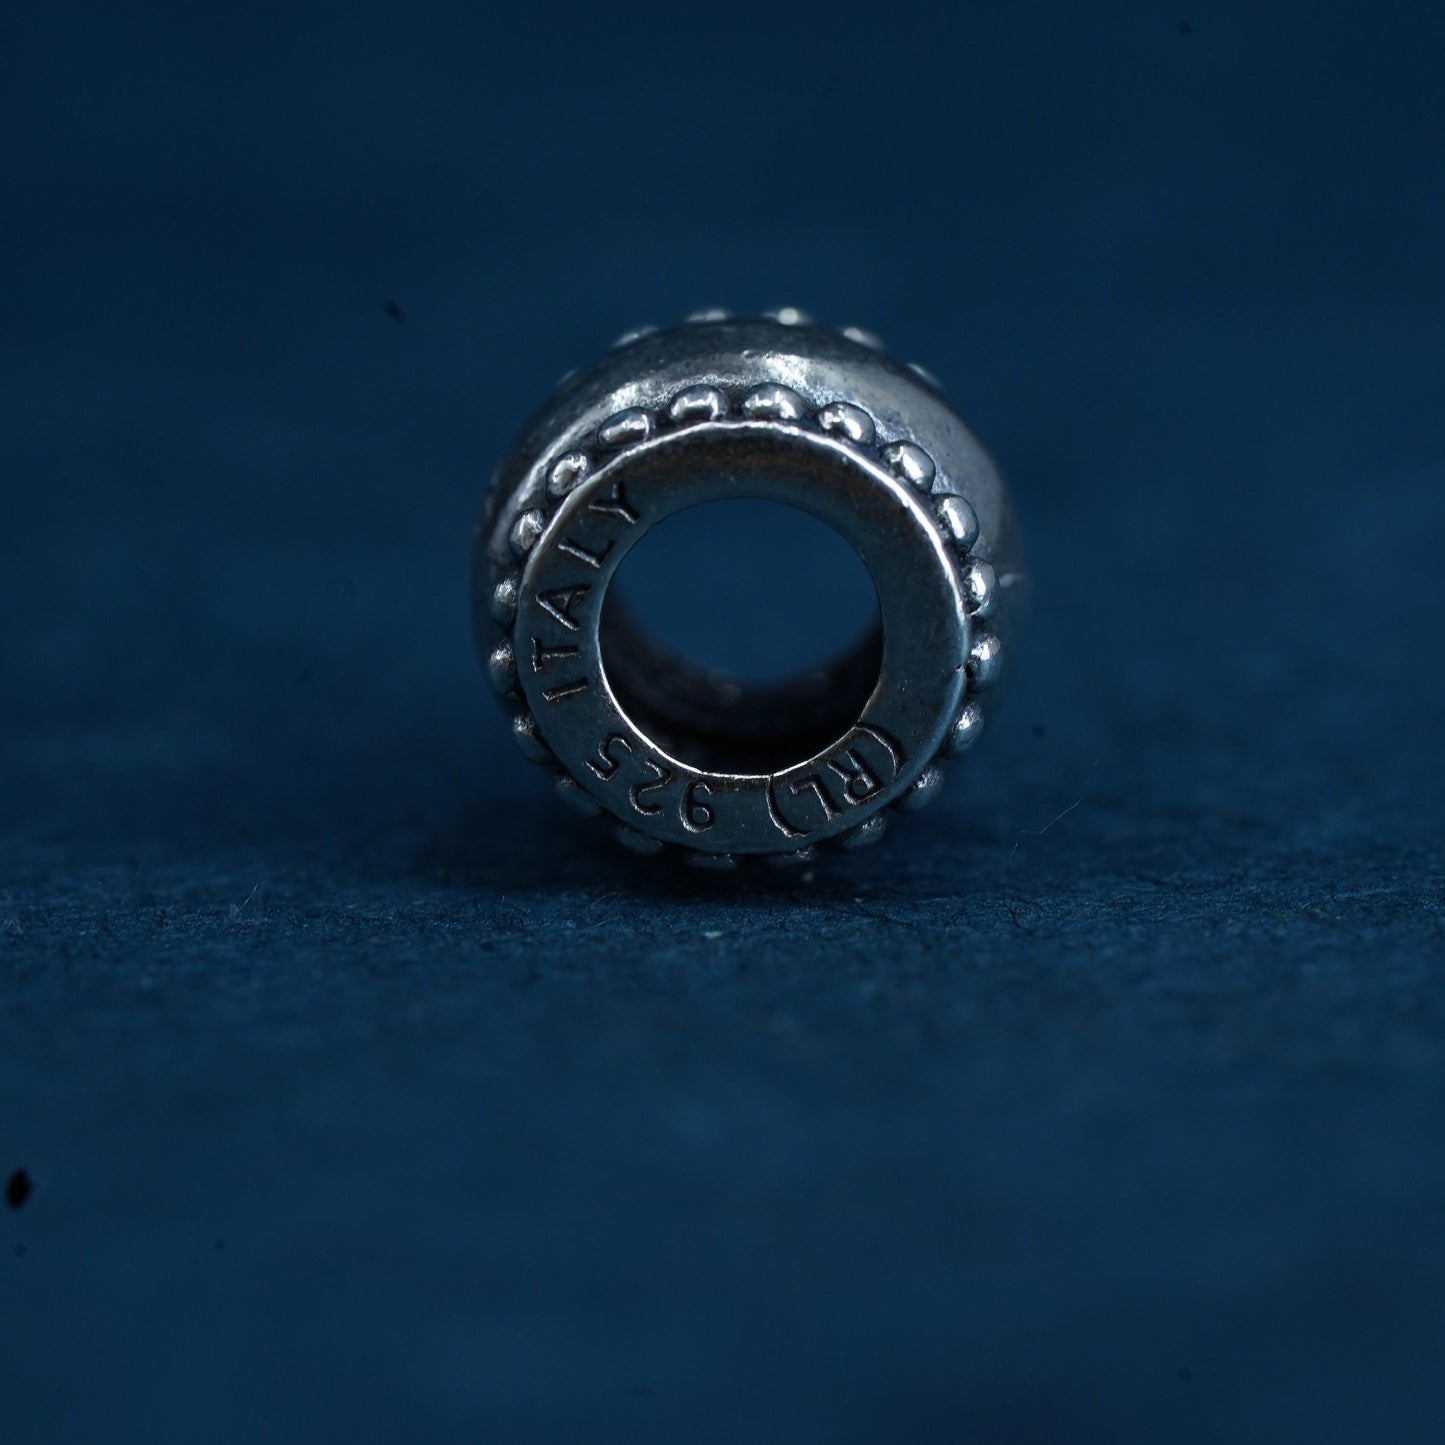 Vintage Sterling silver handmade bead pendant, 925 charm embossed “birthday”